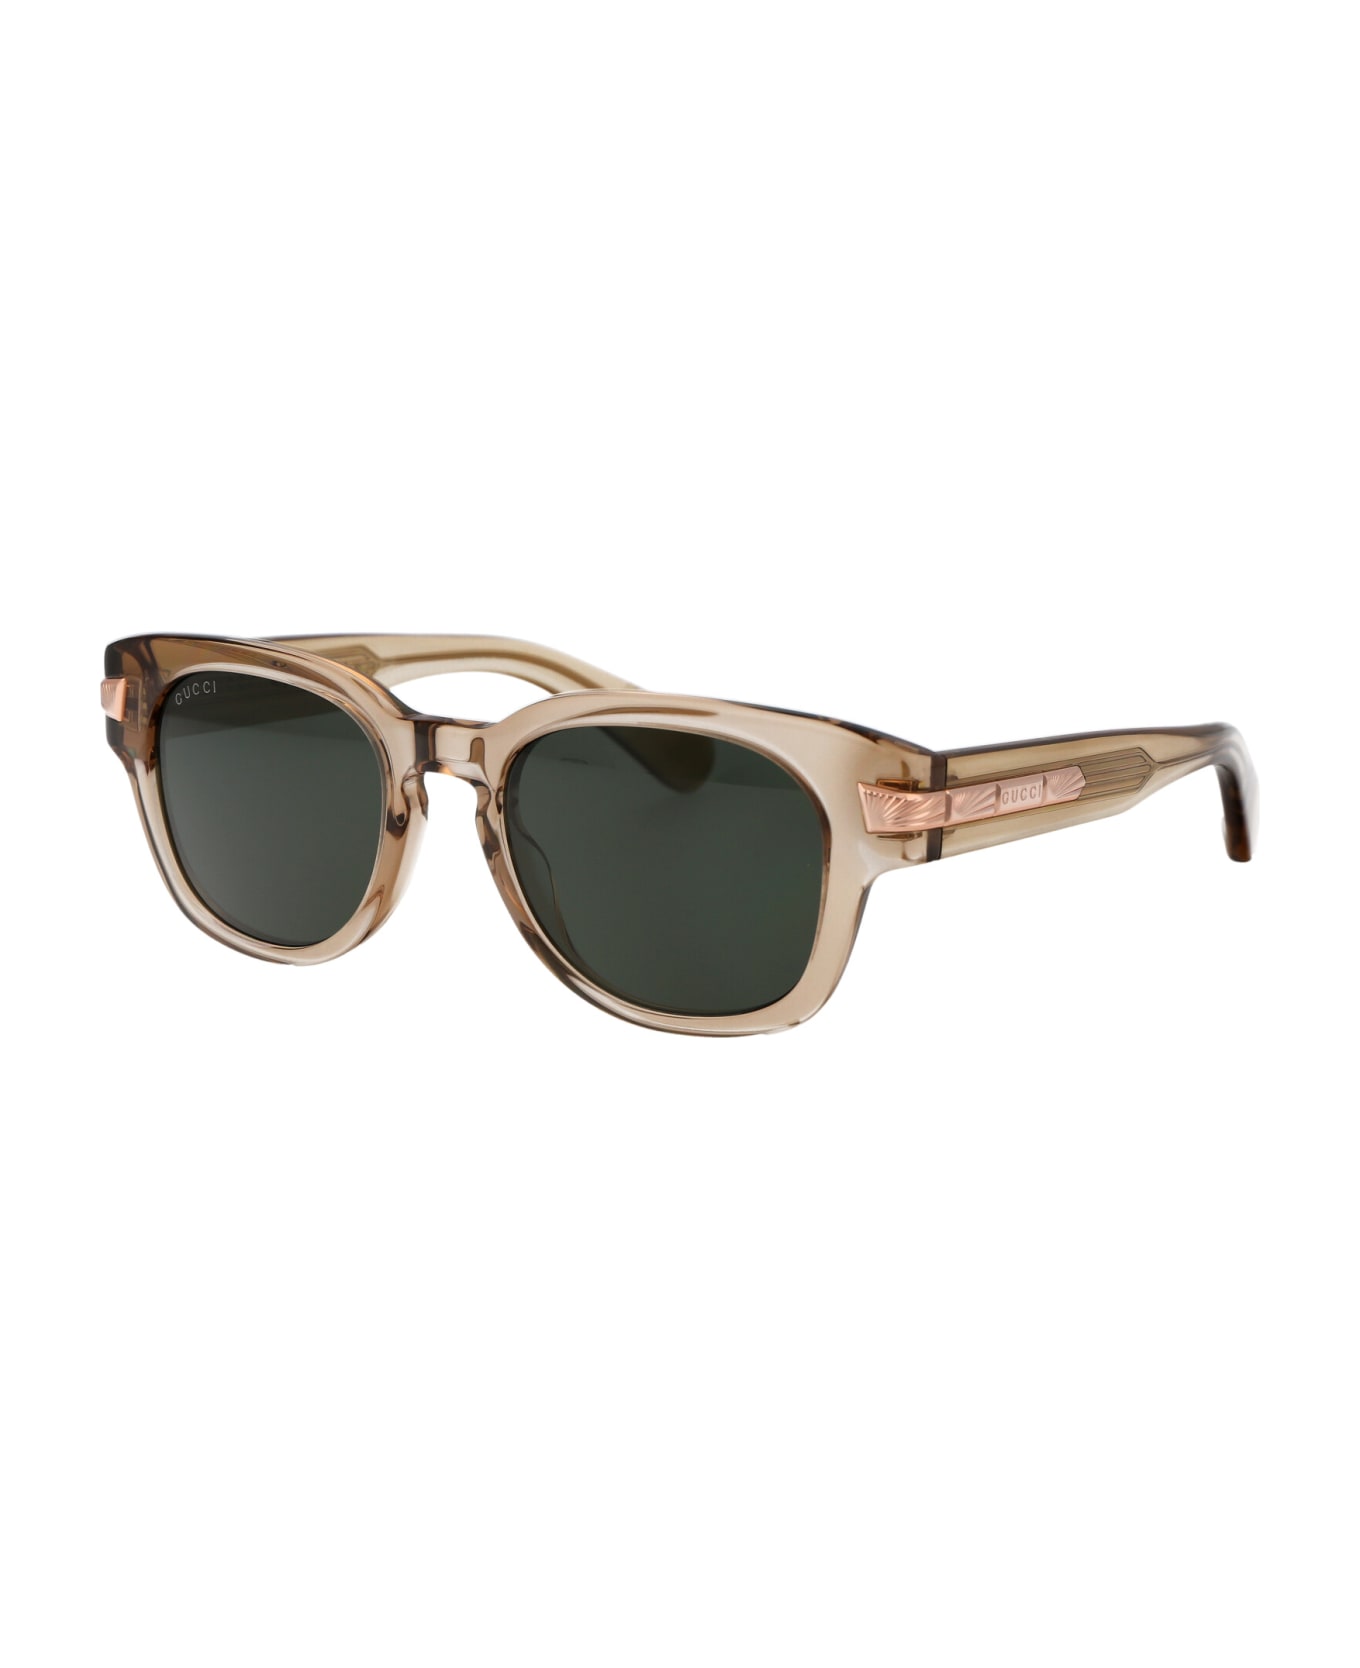 Gucci Eyewear Gg1518s Sunglasses - 004 BROWN BROWN GREY